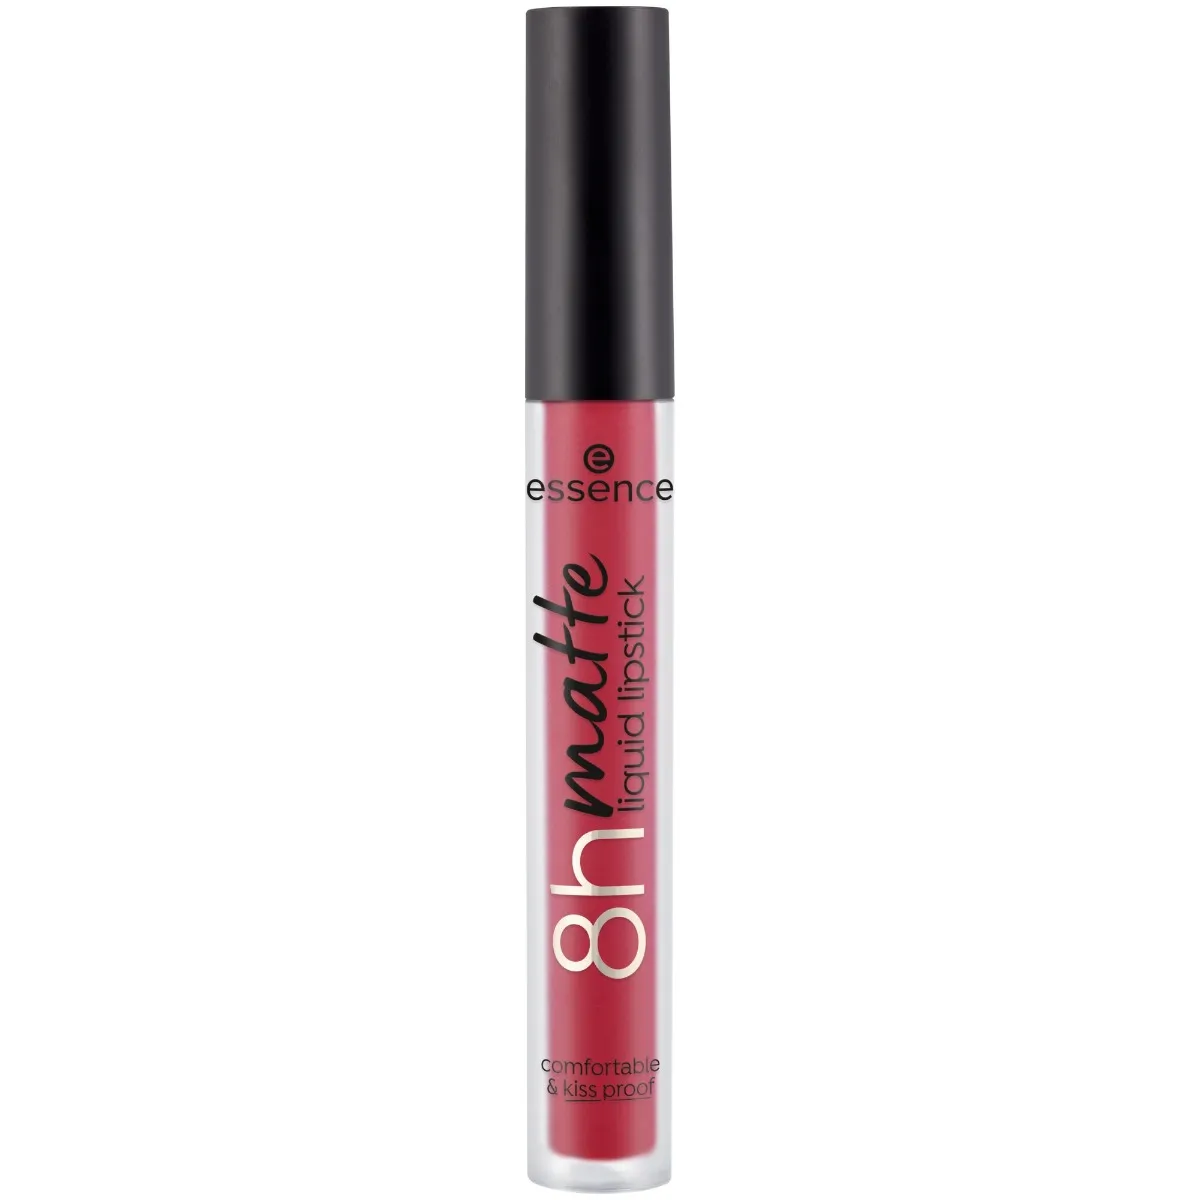 Ruj lichid mat 8h Matte Liquid Lipstick 07 - Classic Red, 2.5ml, Essence 